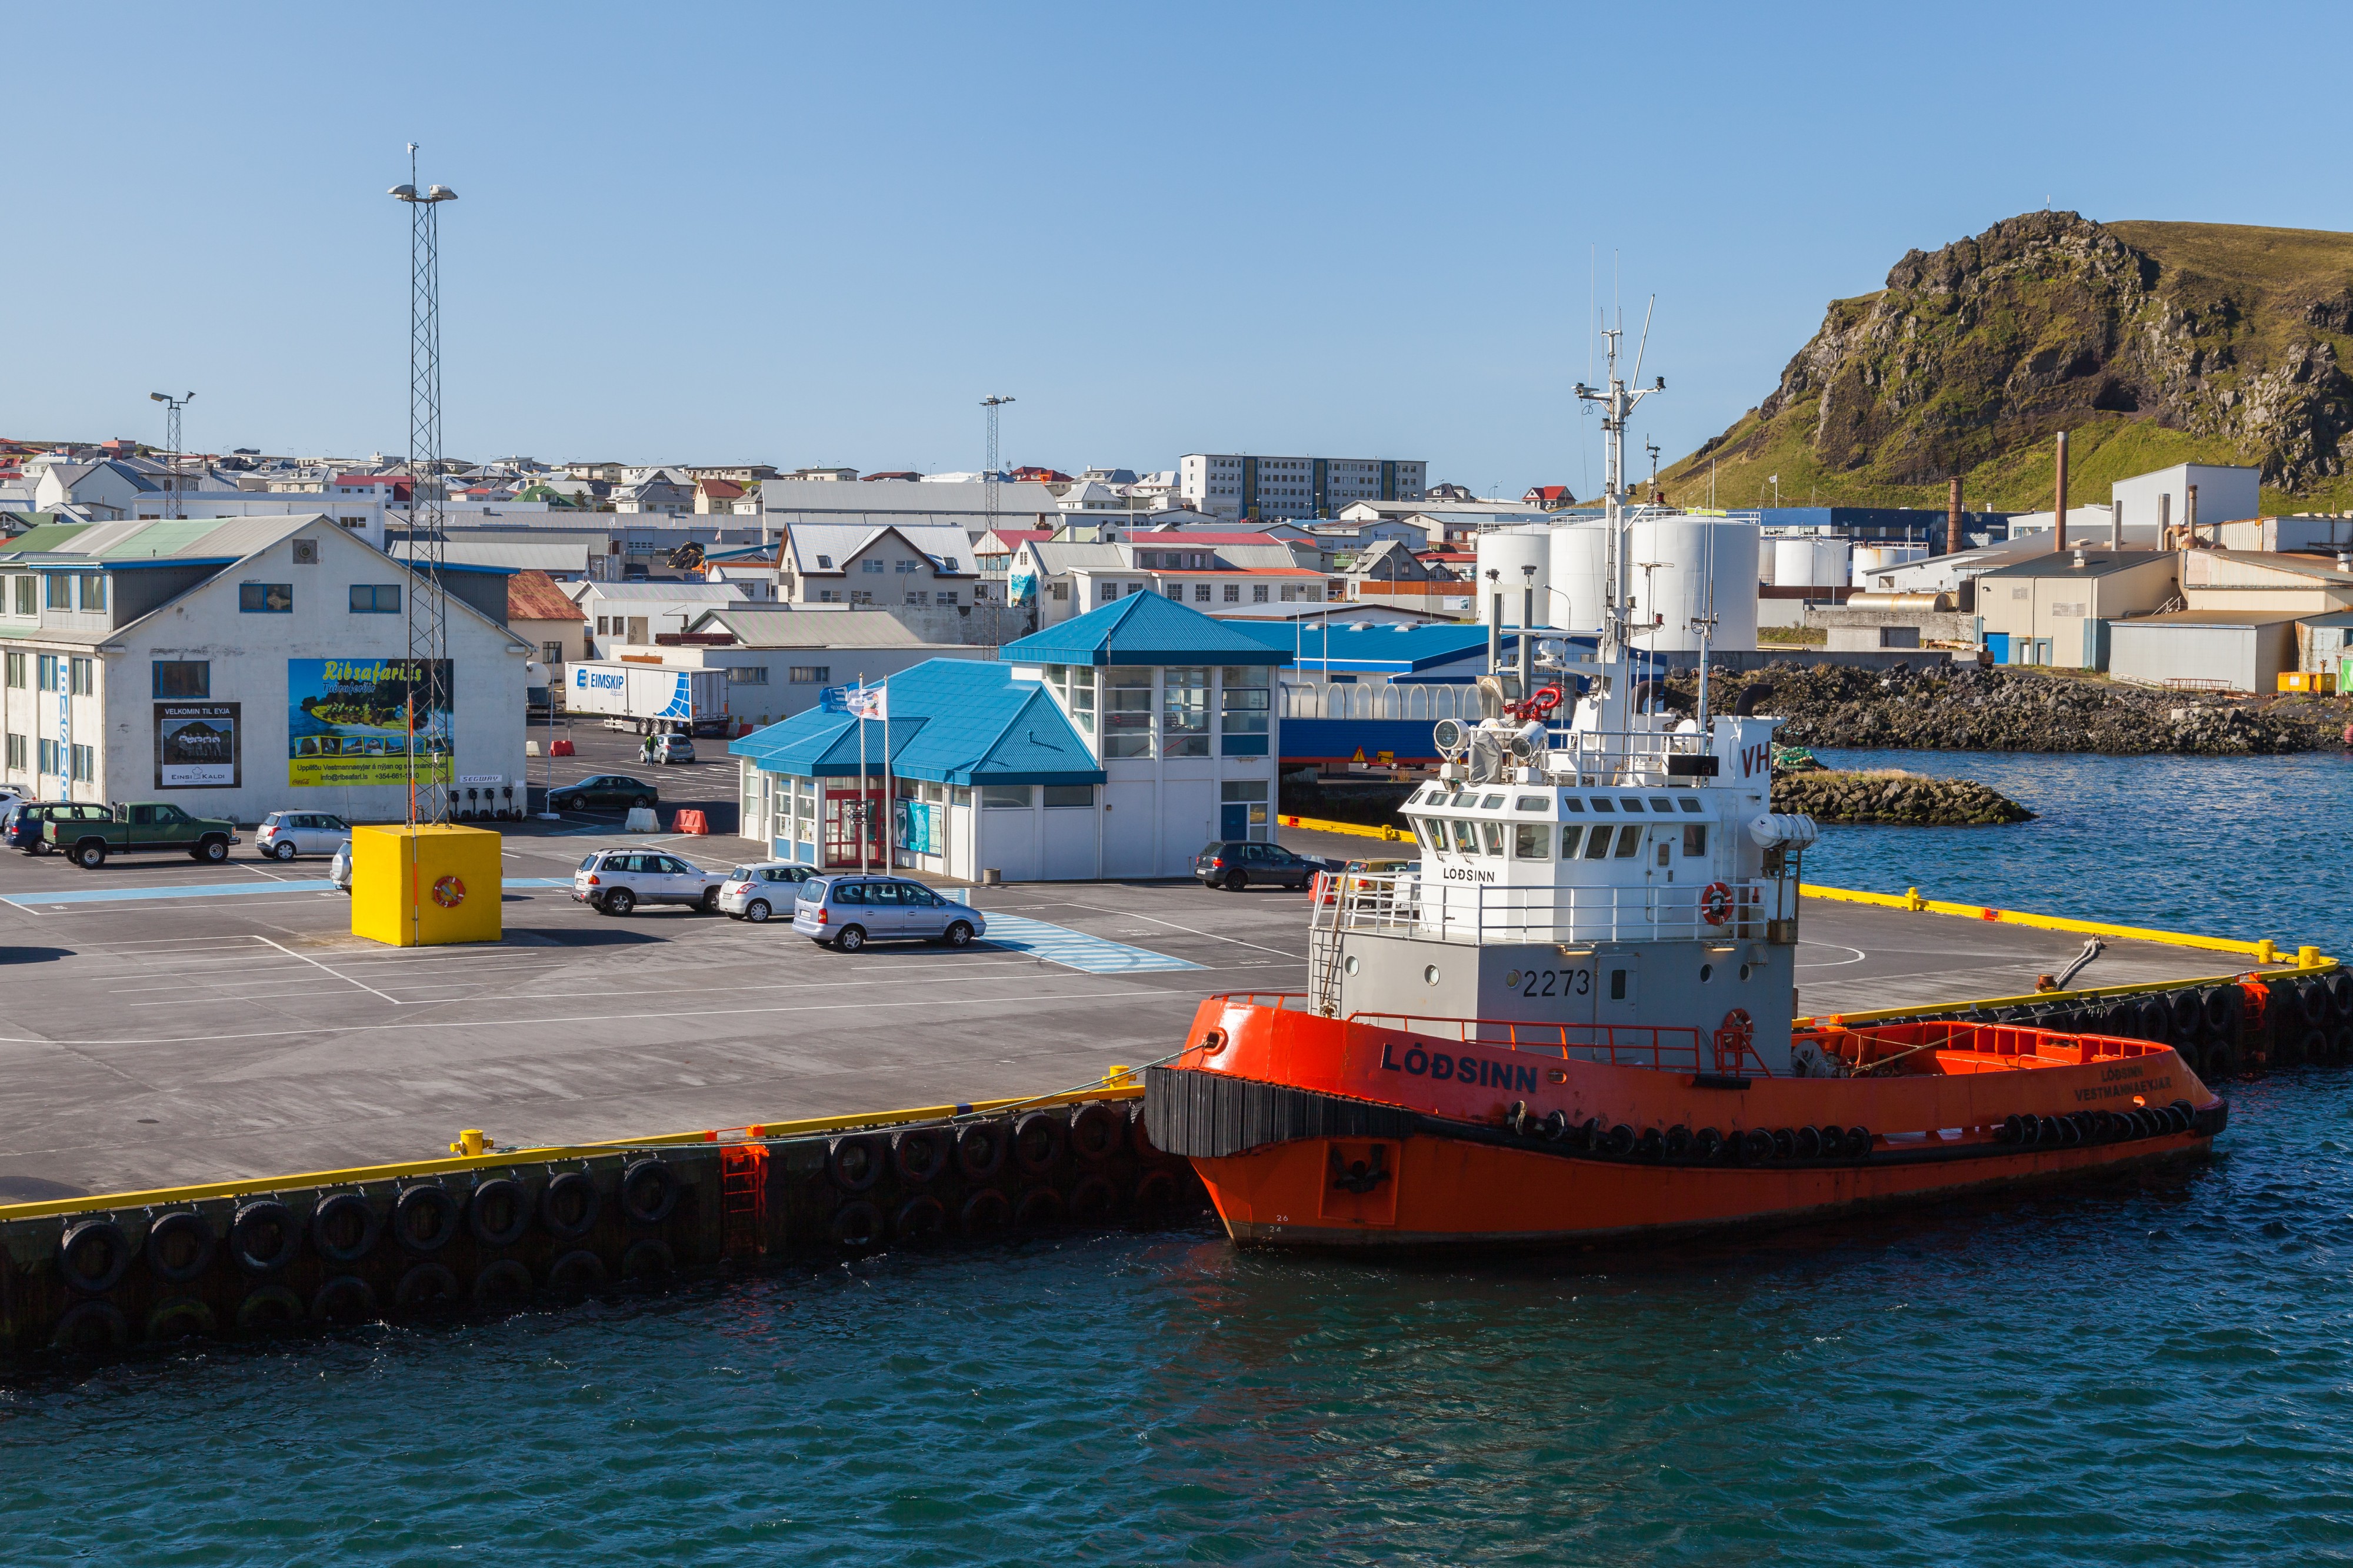 Puerto de Vestmannaeyjar, Heimaey, Islas Vestman, Suðurland, Islandia, 2014-08-17, DD 011